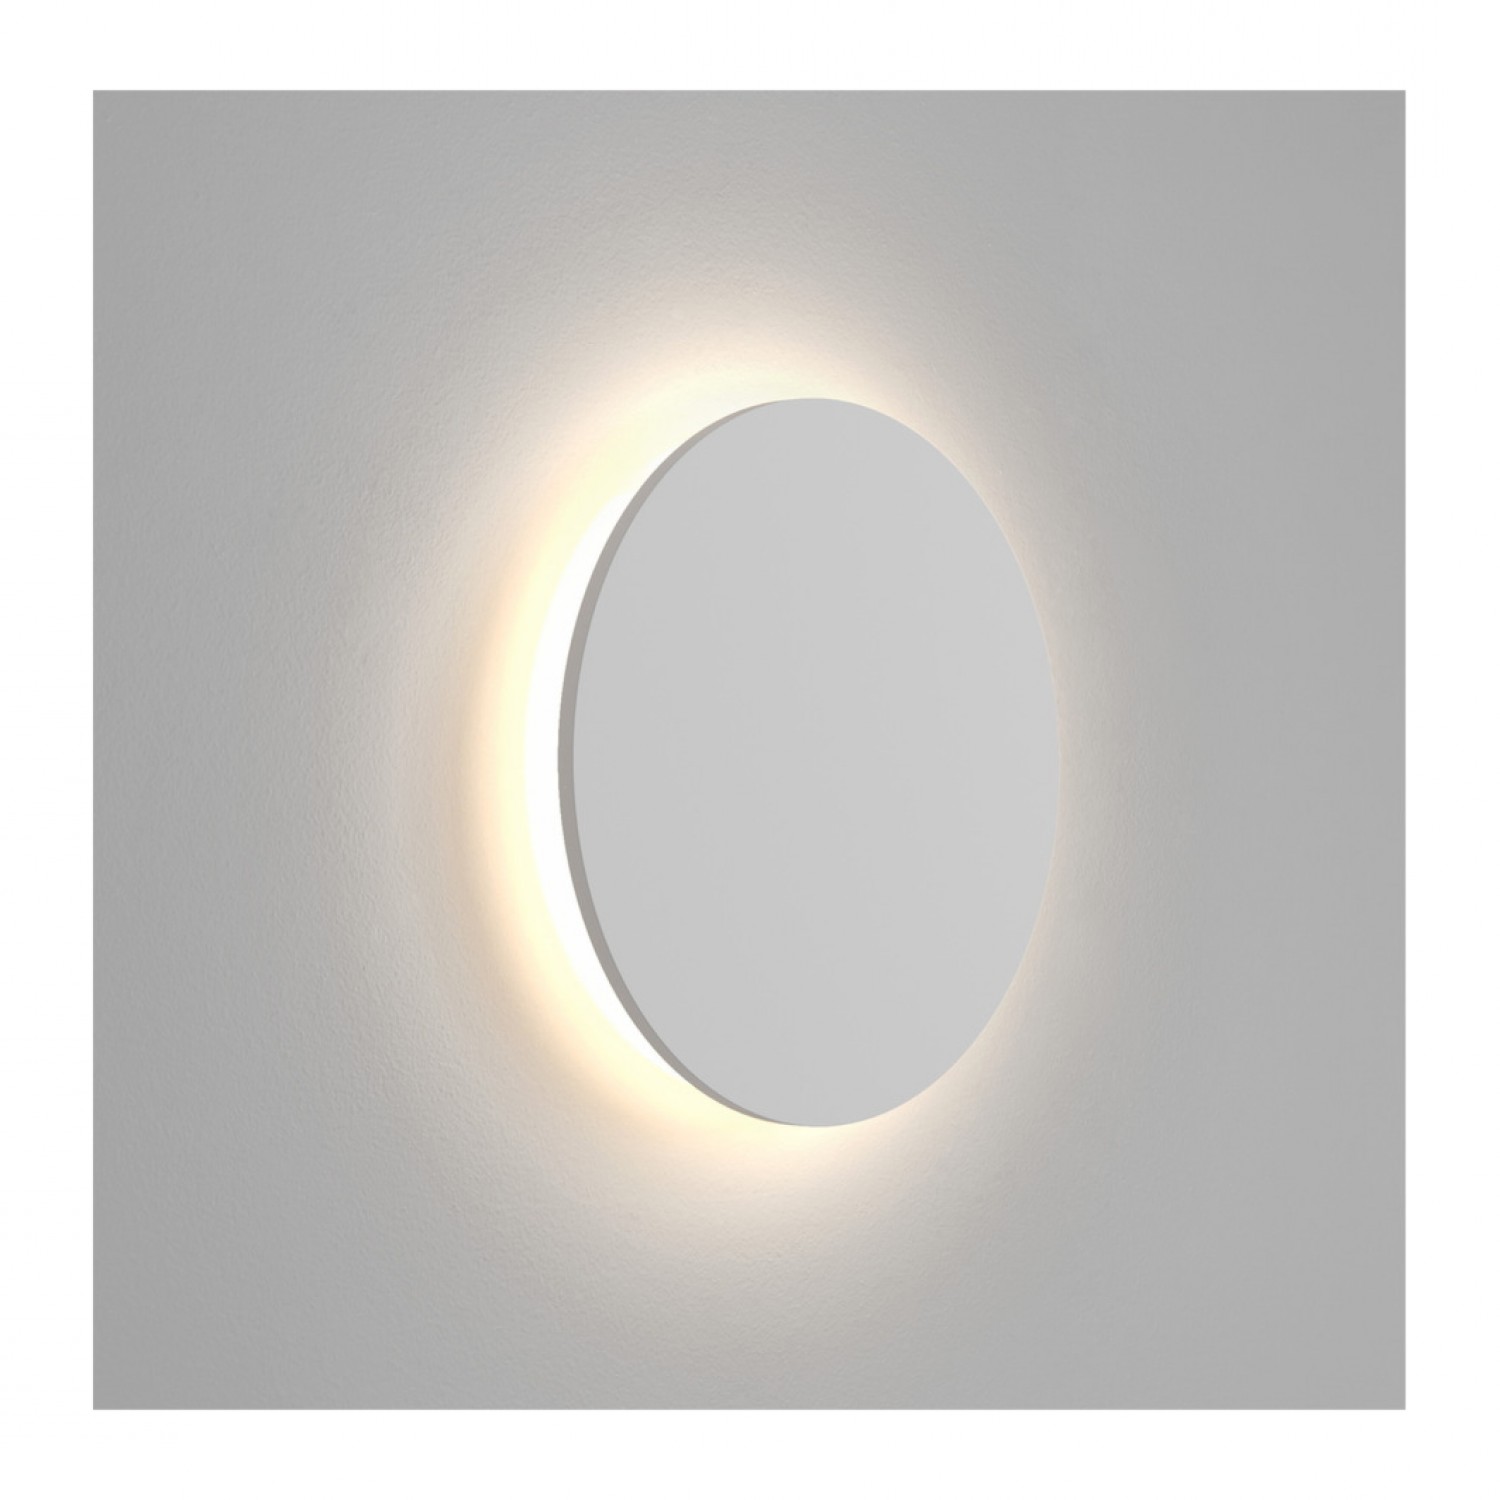 alt_image Бра Astro Eclipse Round 350 LED 2700K  1333025